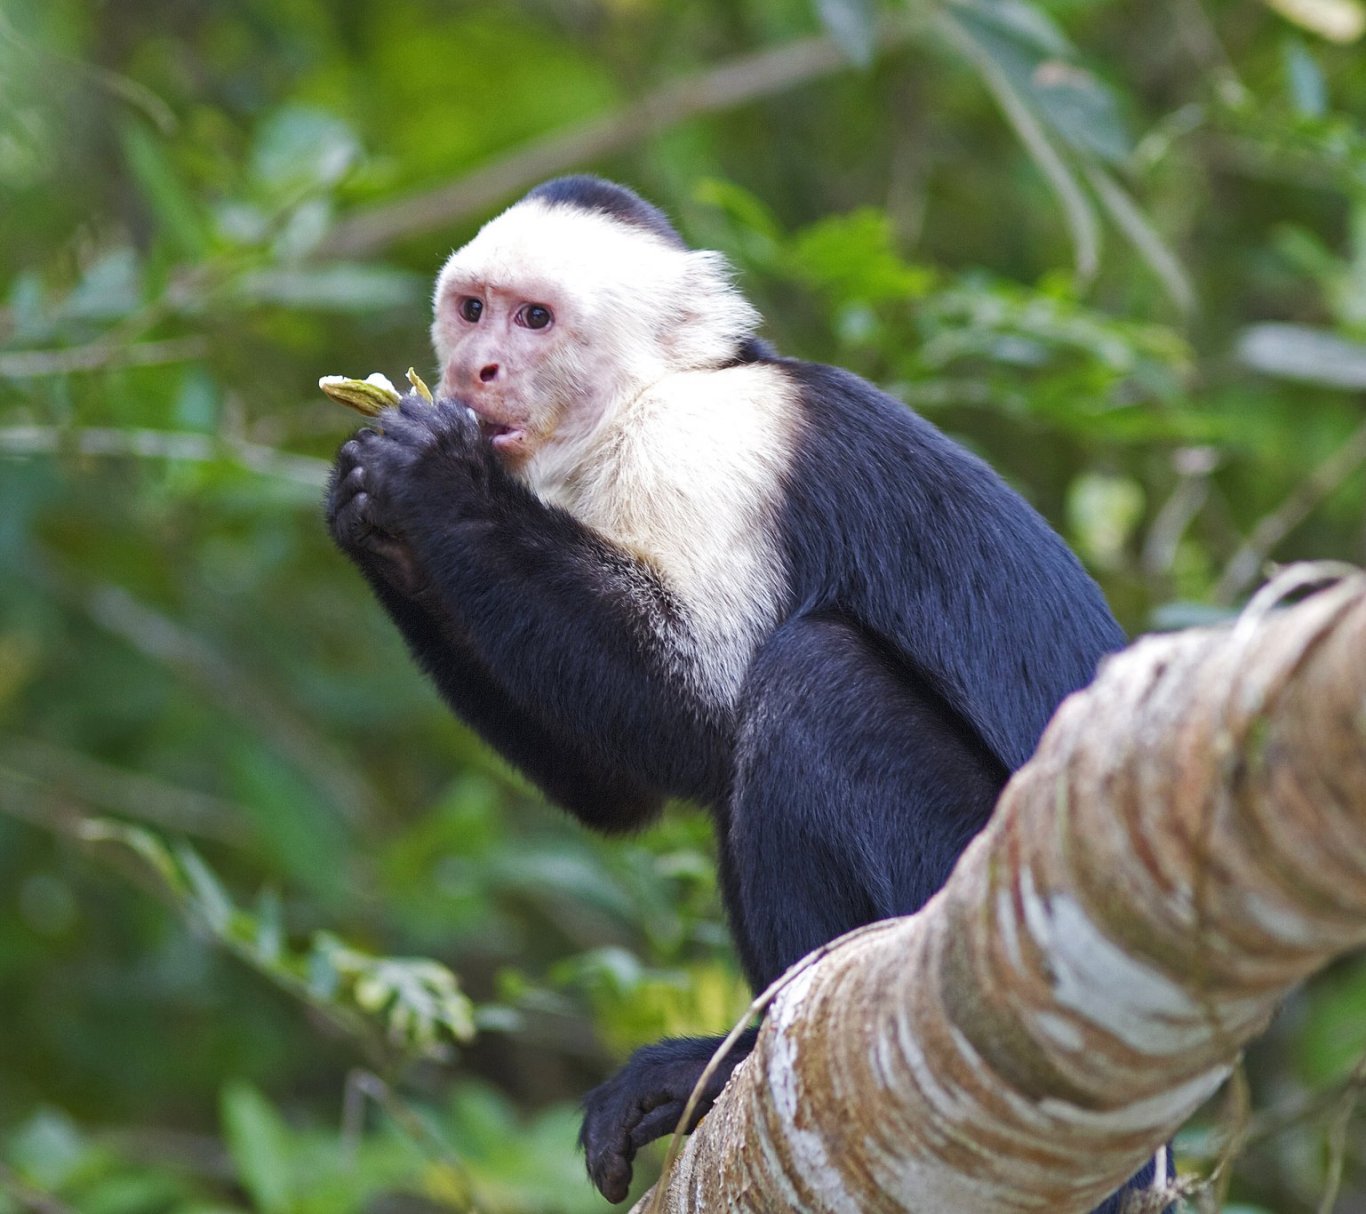 Monkey in rainforest - costa rica